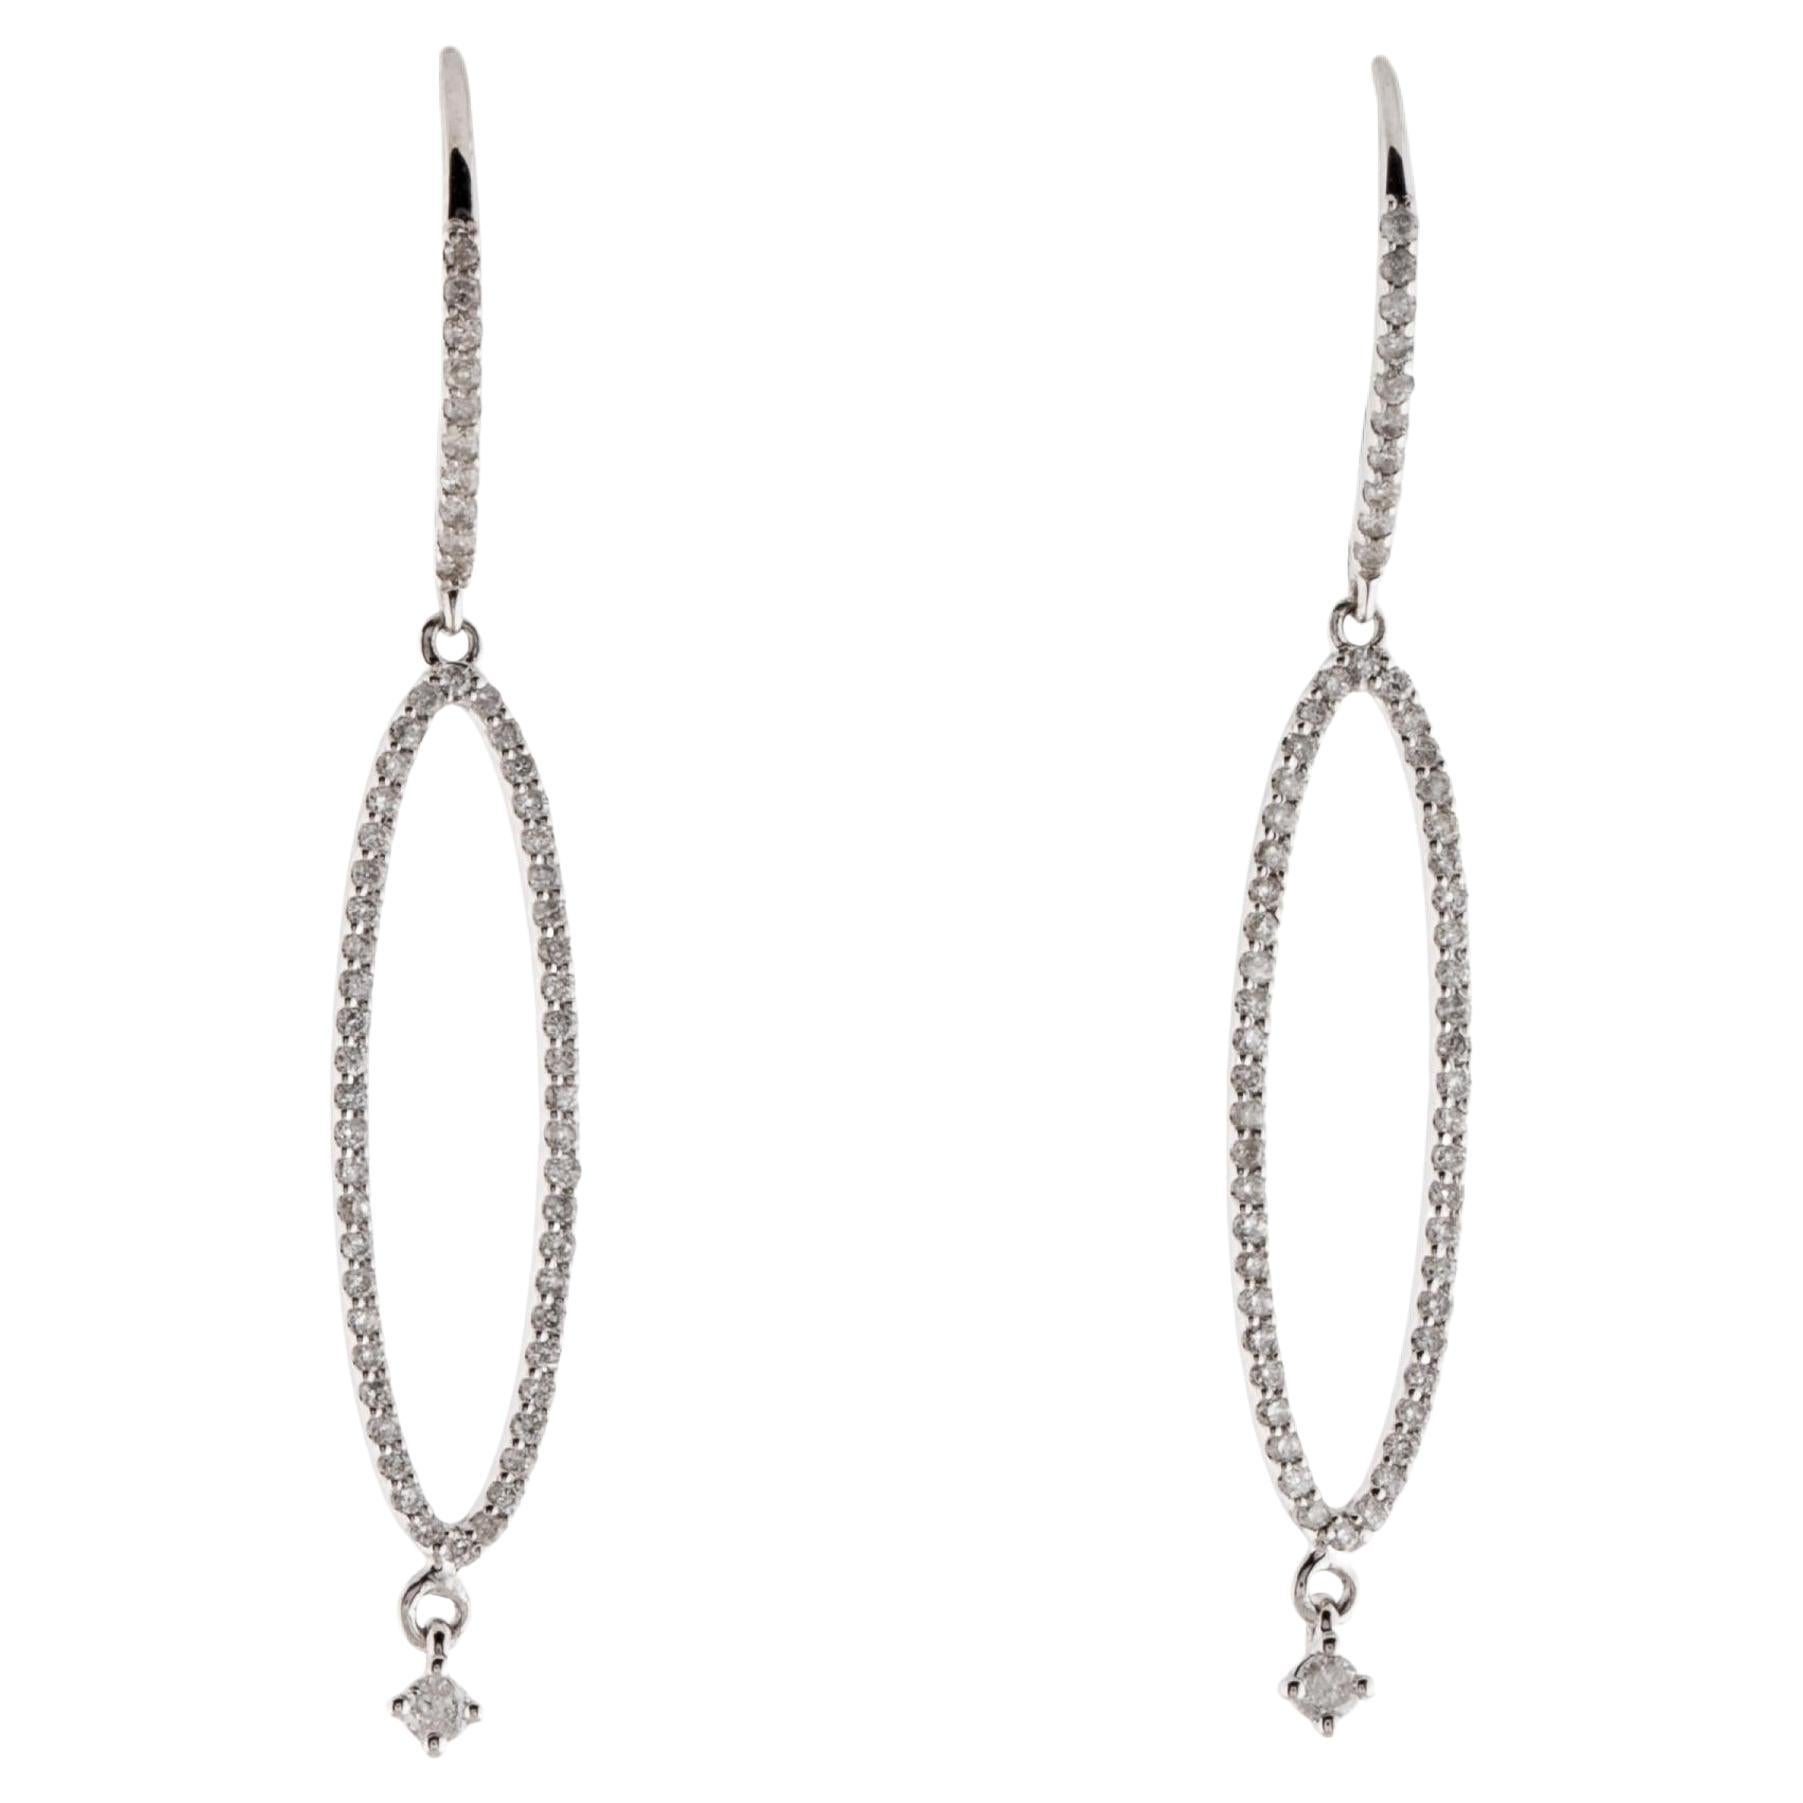 14K Diamond Drop Earrings - Exquisite Sparkle, Timeless Glamour, Elegant Design